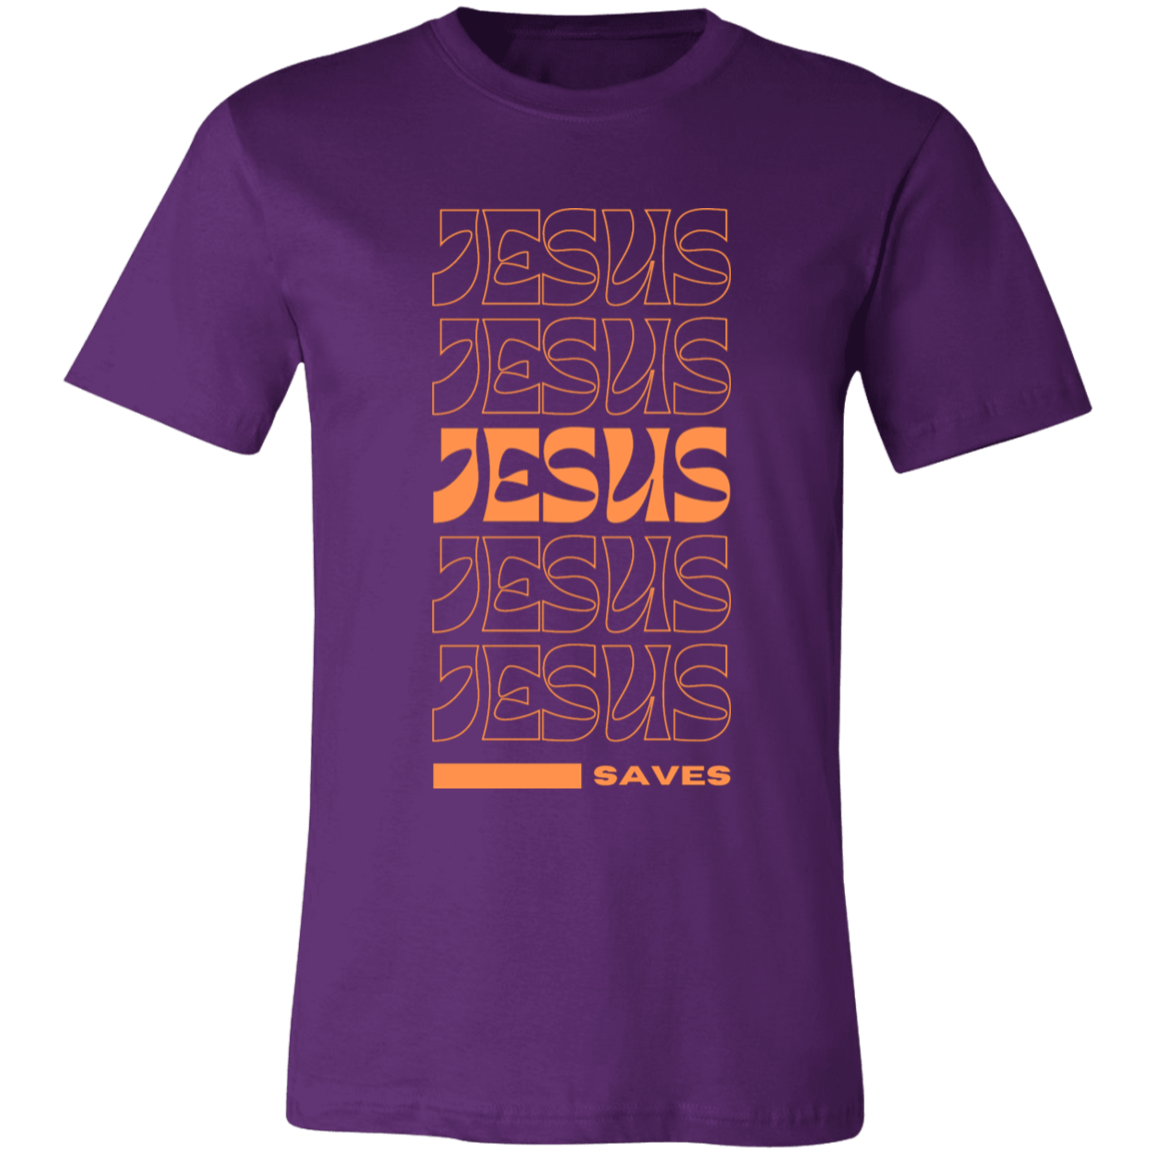 Jesus Saves Jersey Short-Sleeve T-Shirt